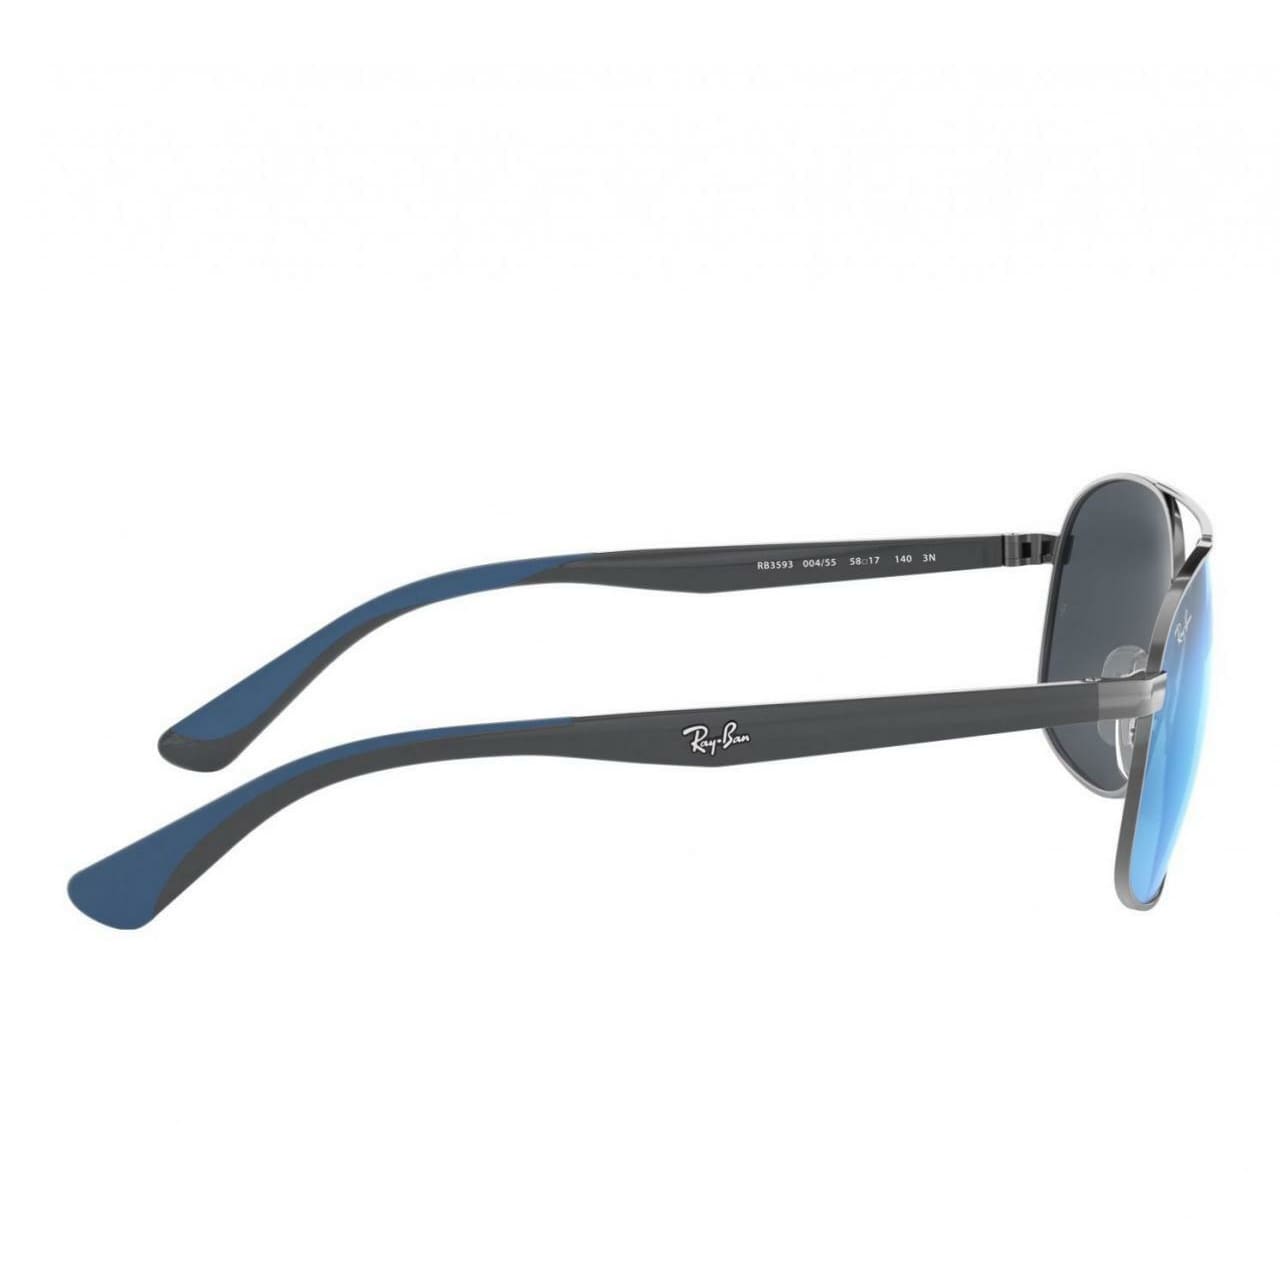 Ray-Ban RB3593-004/55 Gunmetal Grey Square Blue Mirror Lenses Metal Sunglasses Frames 8053672919851